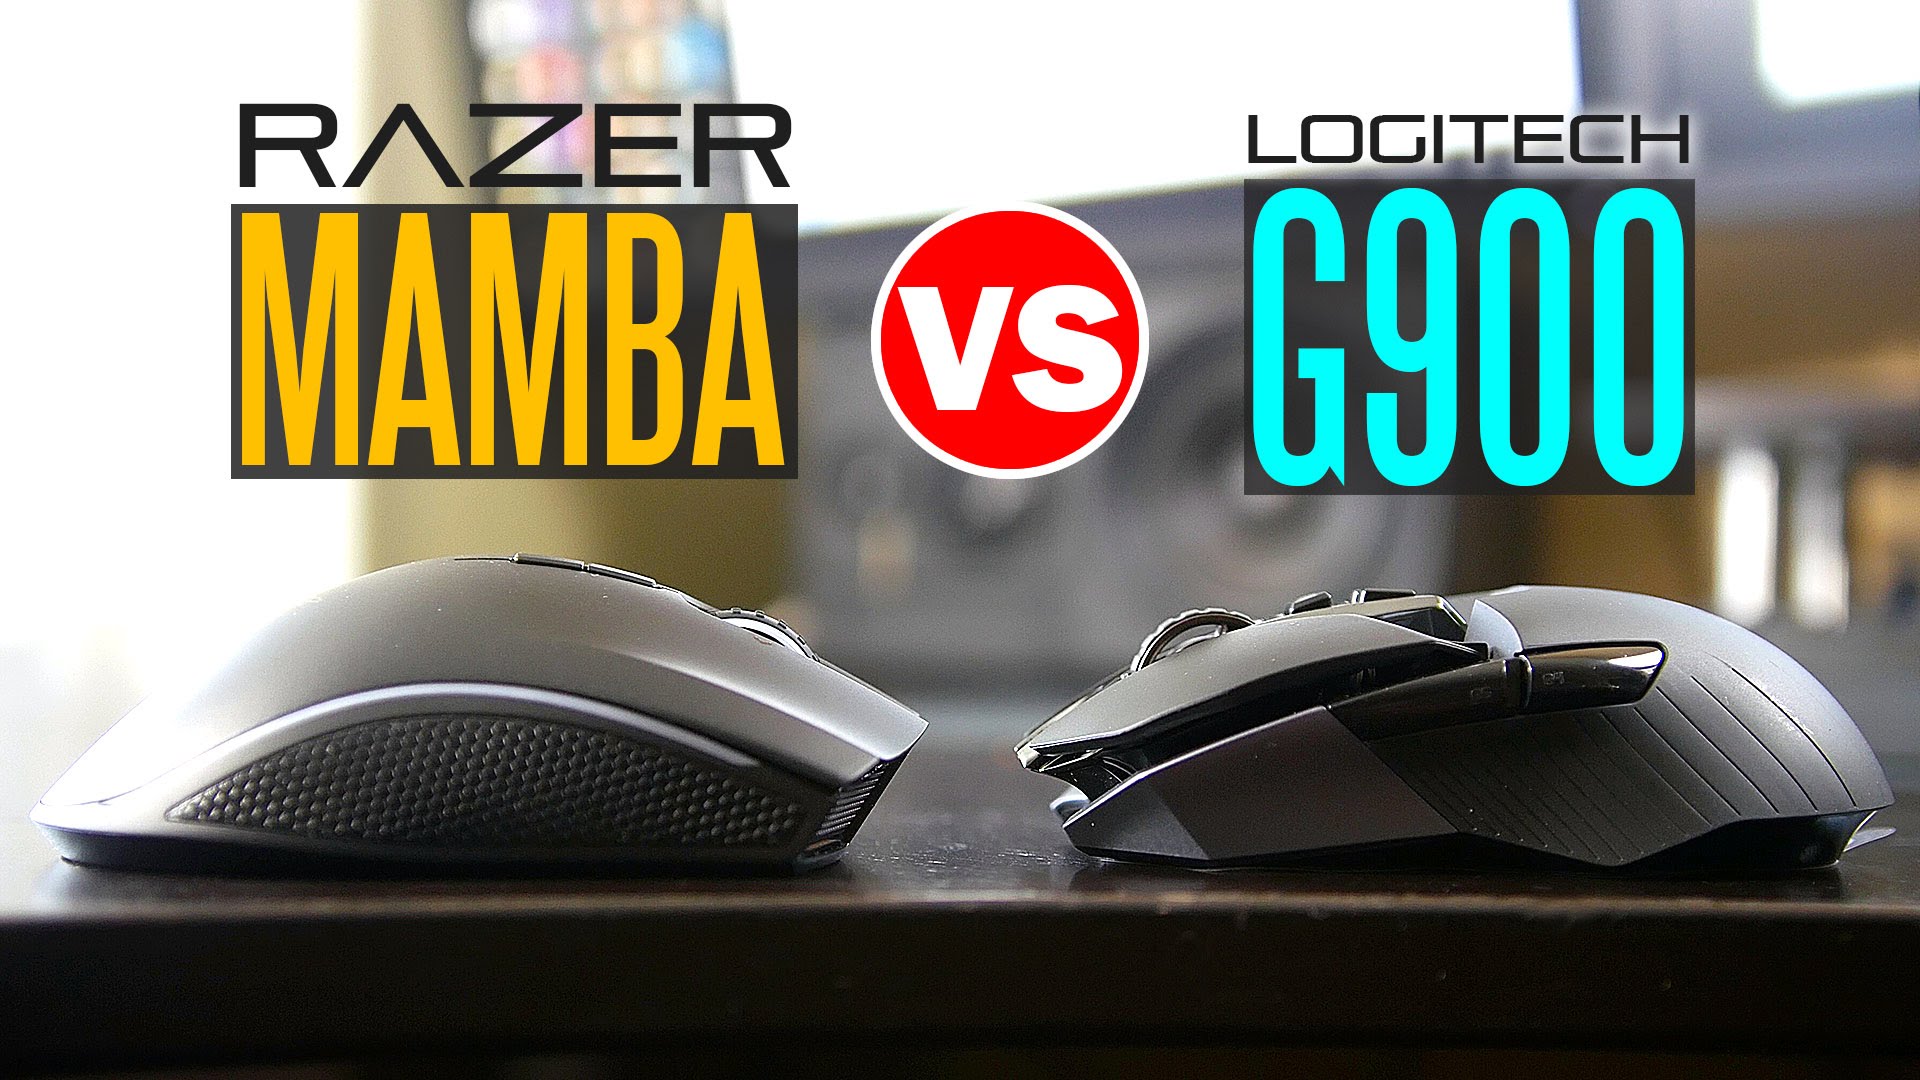 Logitech G900 vs Razer Mamba Chroma - Ultimate Wireless Gaming Mouse Comparison